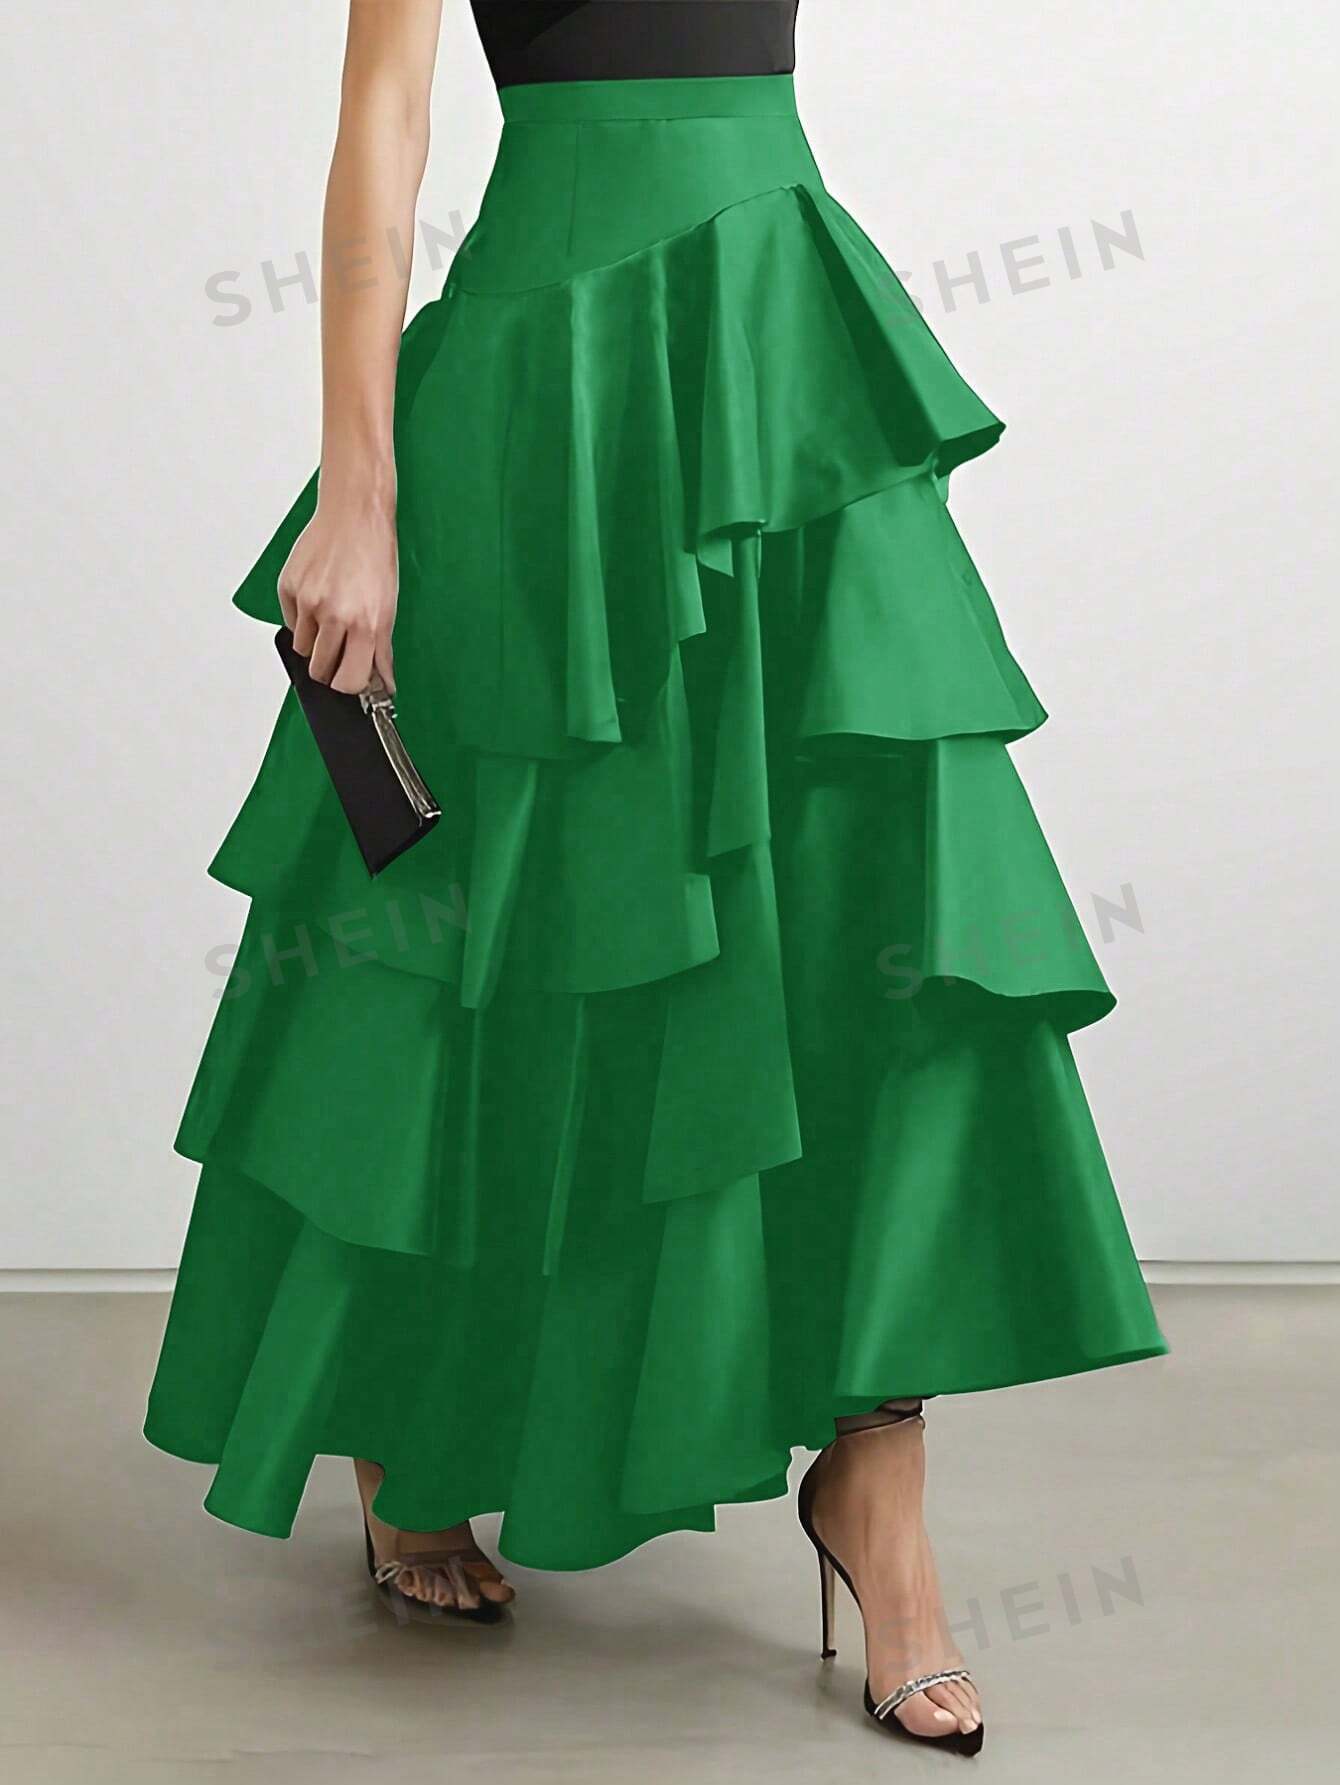 SHEIN Privé Однотонная многослойная юбка-миди с рюшами, зеленый shein privé однотонная многослойная юбка миди с рюшами темно синий